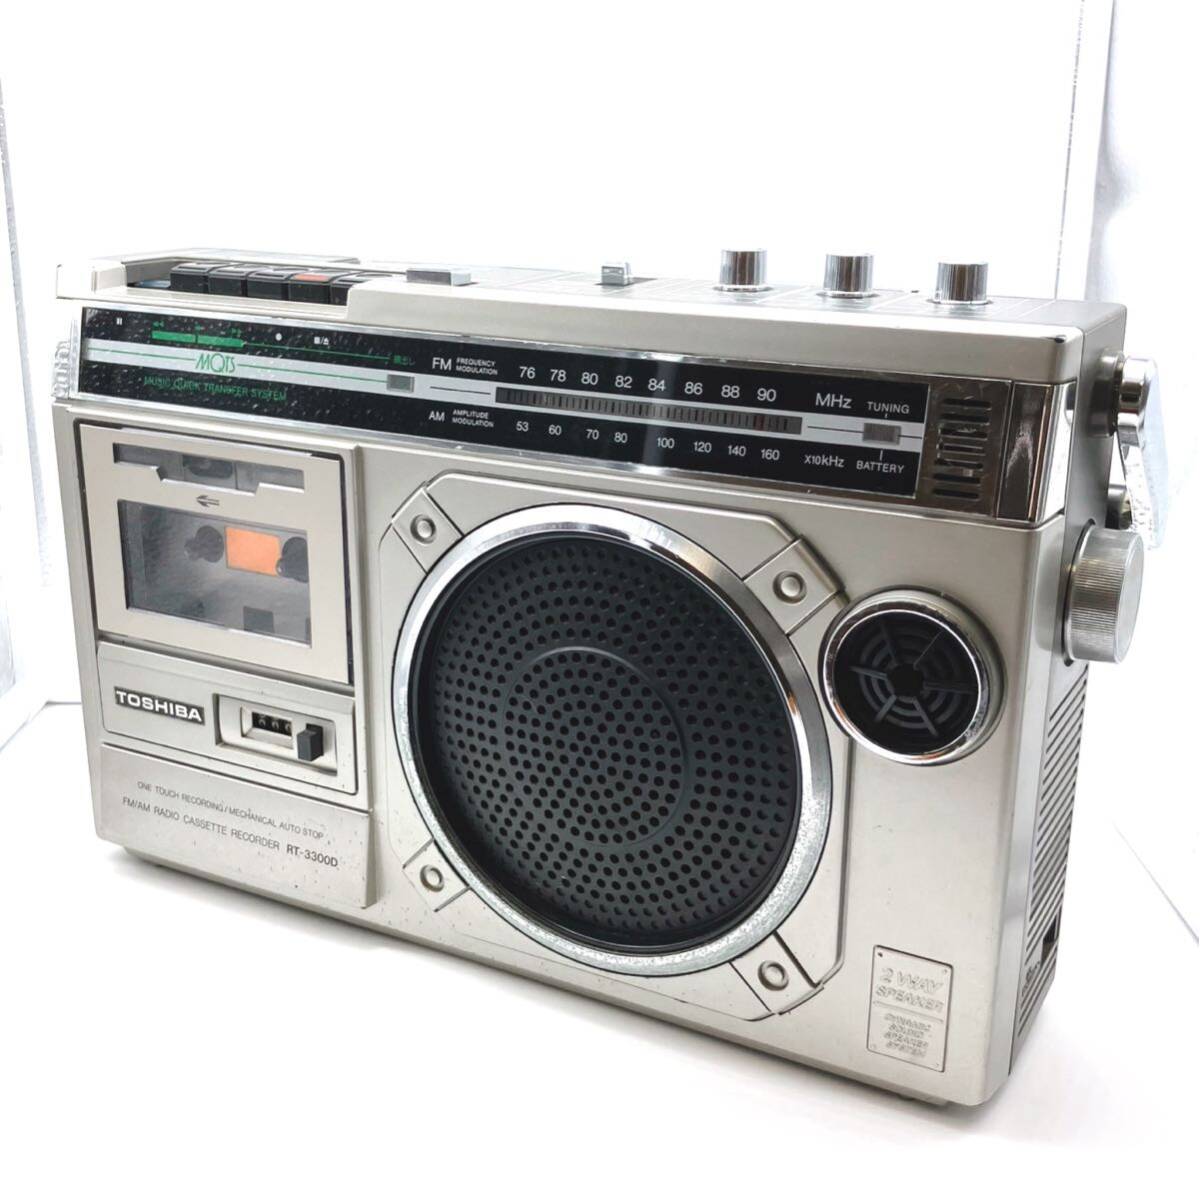 TOSHIBA/東芝/FM/AM RADIO CASSETTE RECORDER/ラジオカセットレコーダー/RT-3300D/ラジカセ/中古品/現状品/通電OK/ジャンク/45の画像1